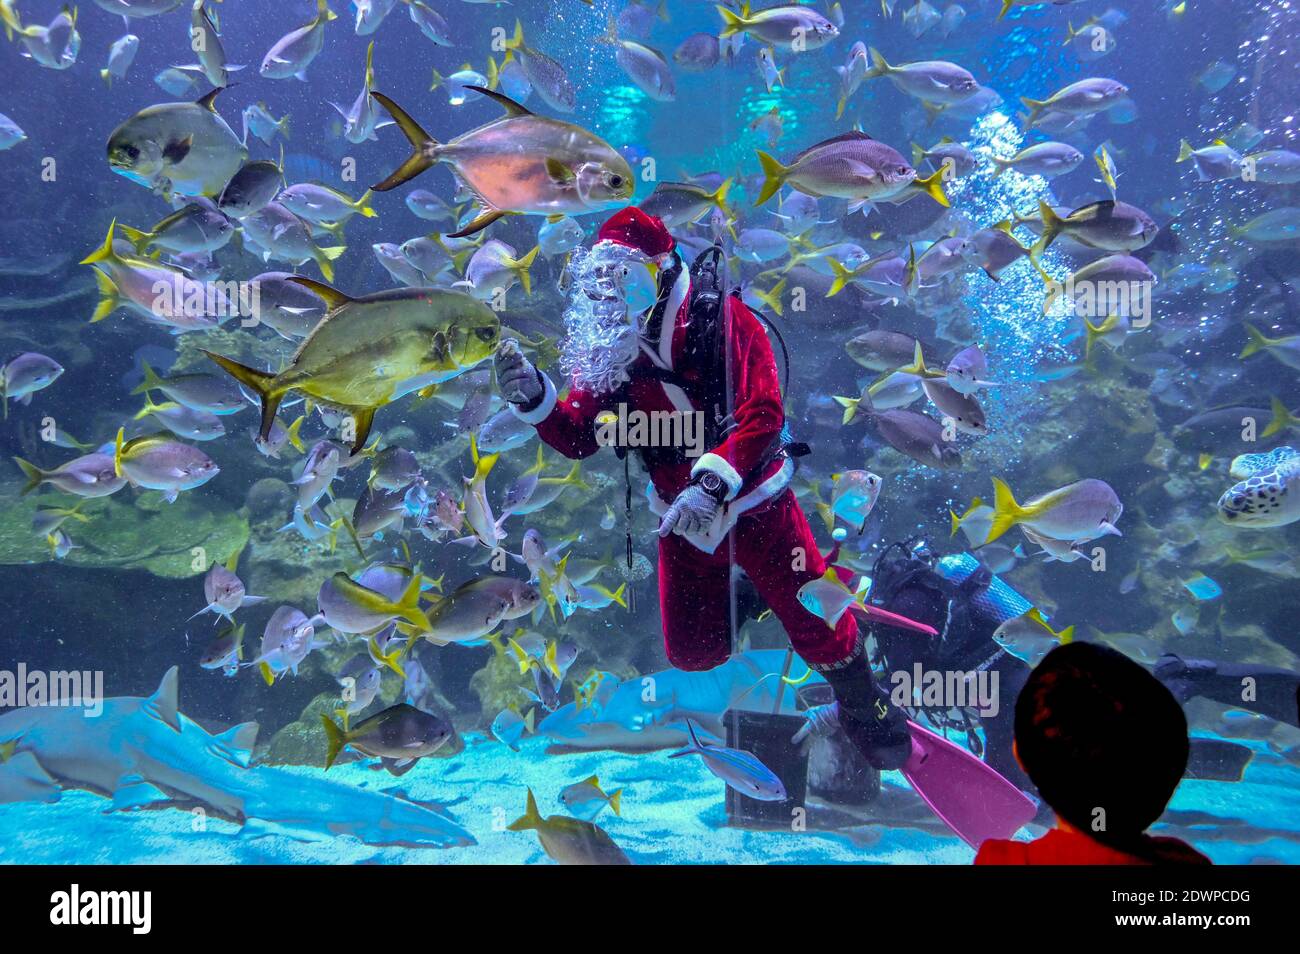 Kuala Lumpur, Malaysia . 23rd Dec, 2020. A scuba diver dressed as Santa Claus feeds fish during a performance at Aquaria KLCC aquarium in Kuala Lumpur, Malaysia, Dec. 23, 2020. (Photo by Chong Voon Chung/Xinhua) Credit: Xinhua/Alamy Live News Stock Photo